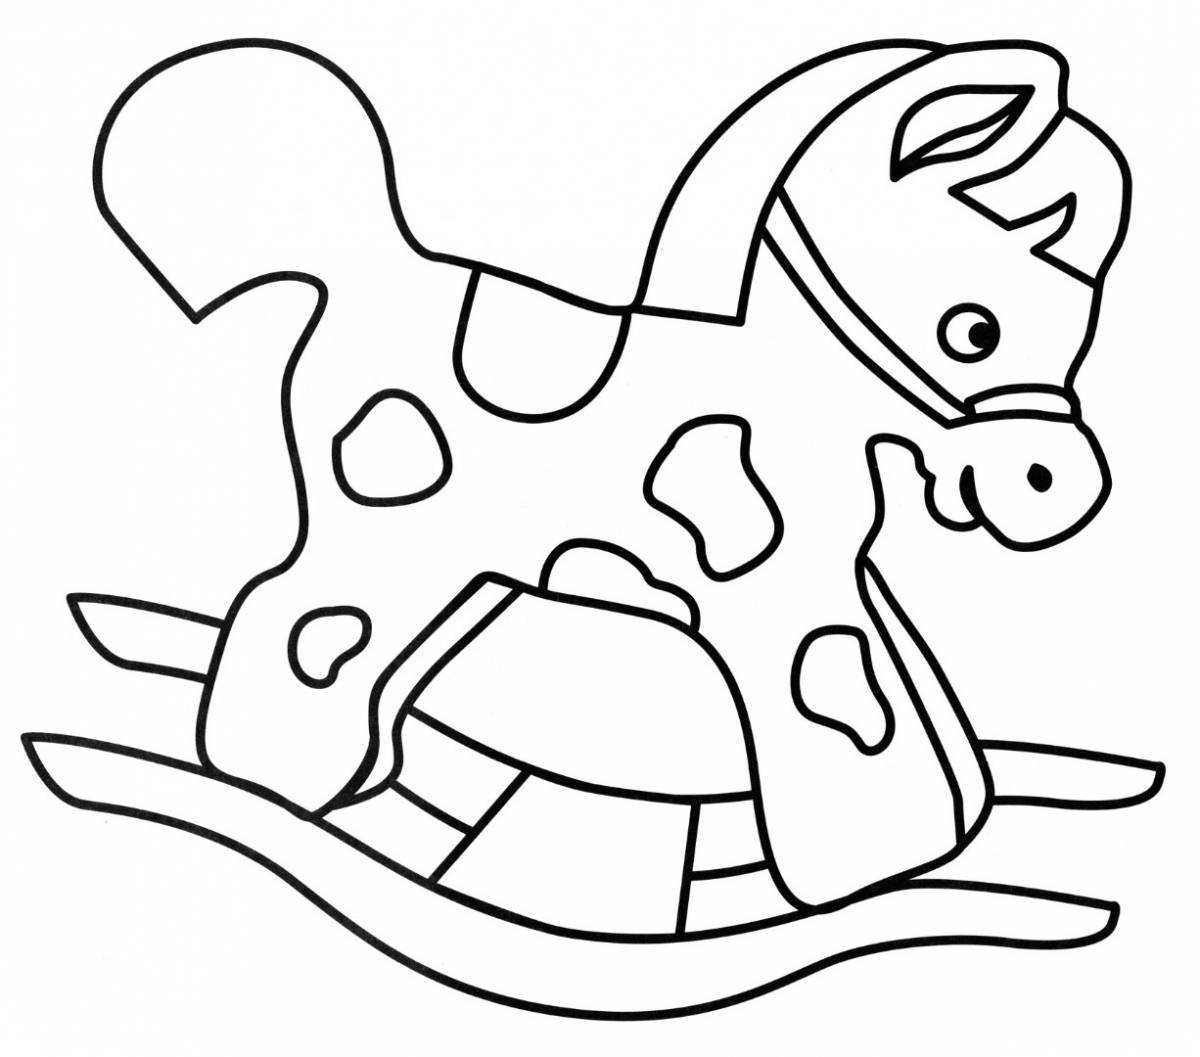 Coloring book shining rocking horse